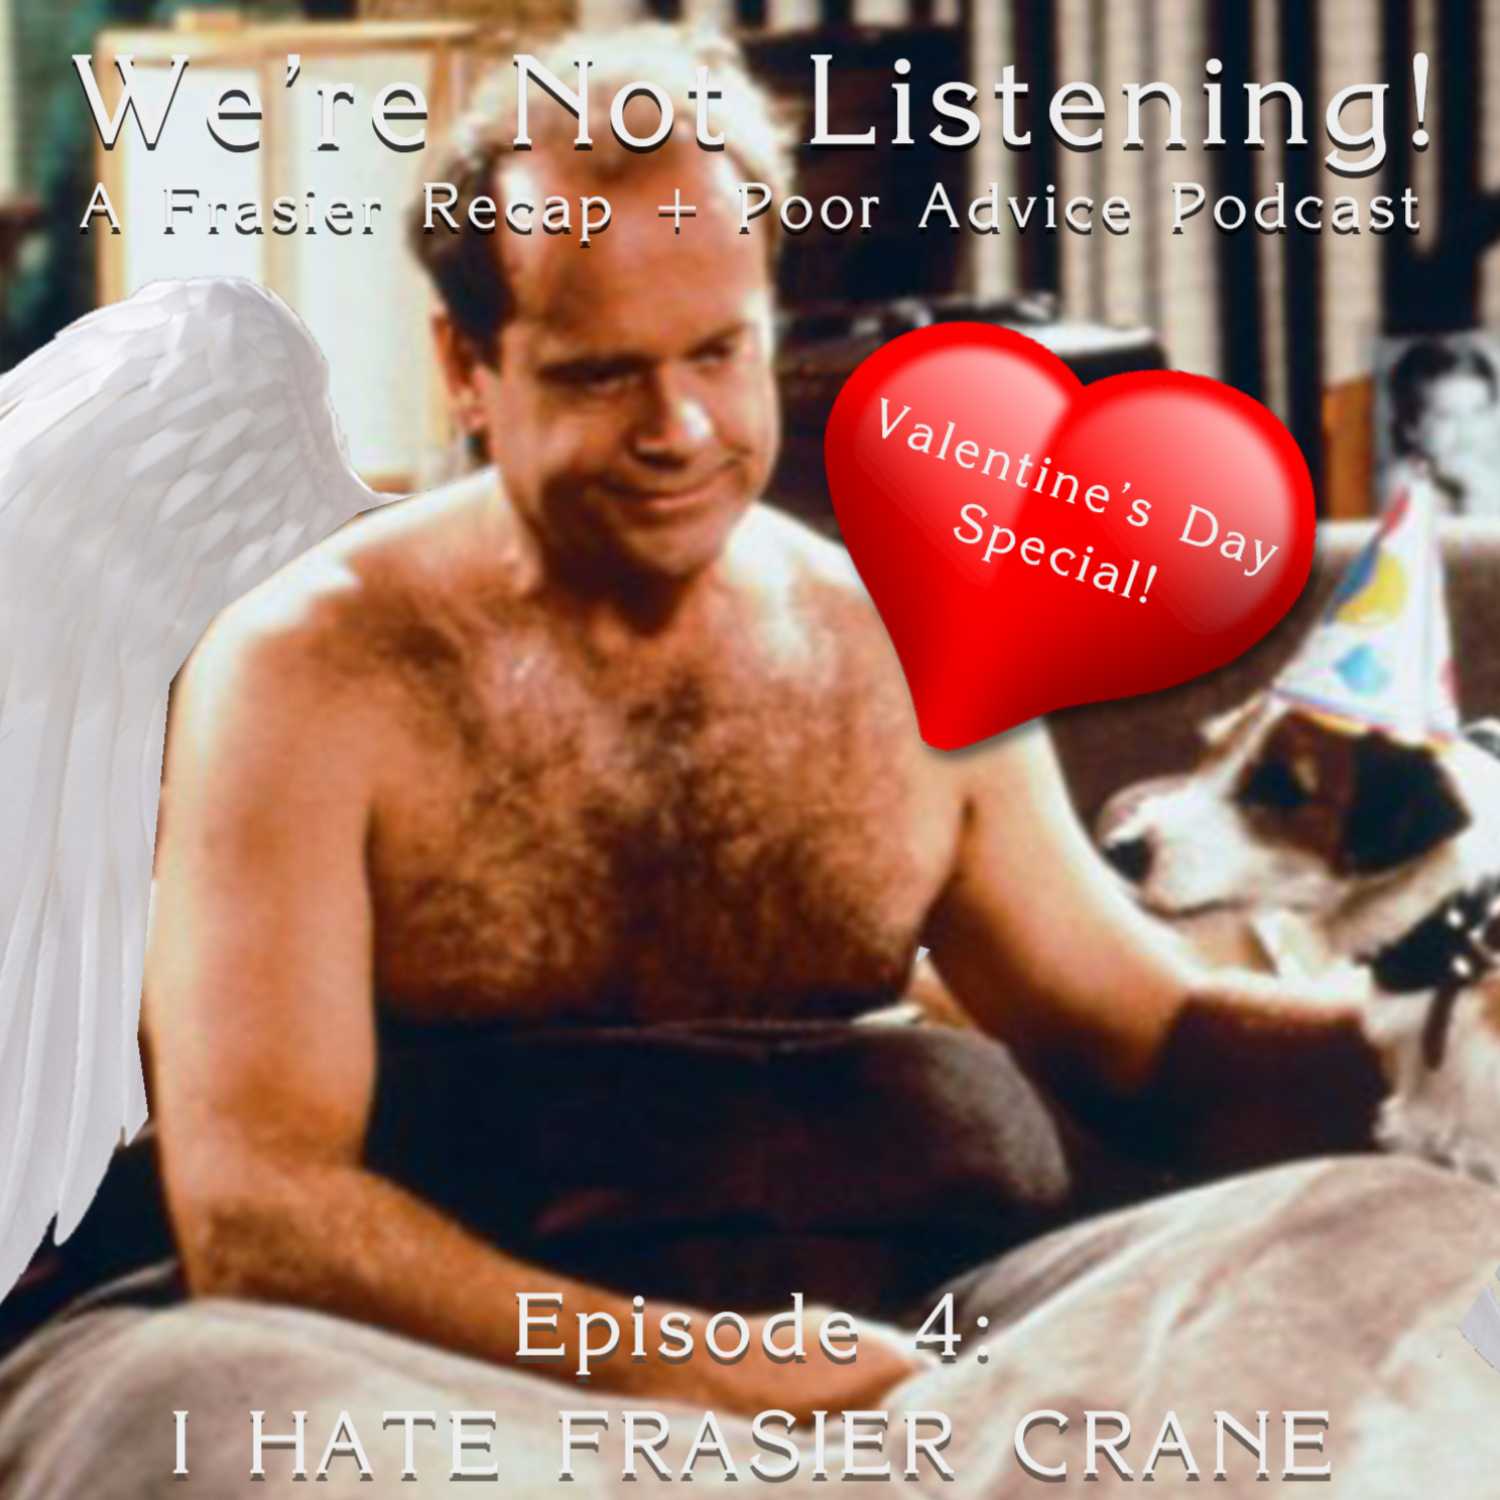 Episode Four: I HATE FRASIER CRANE- Valentine's Day Special